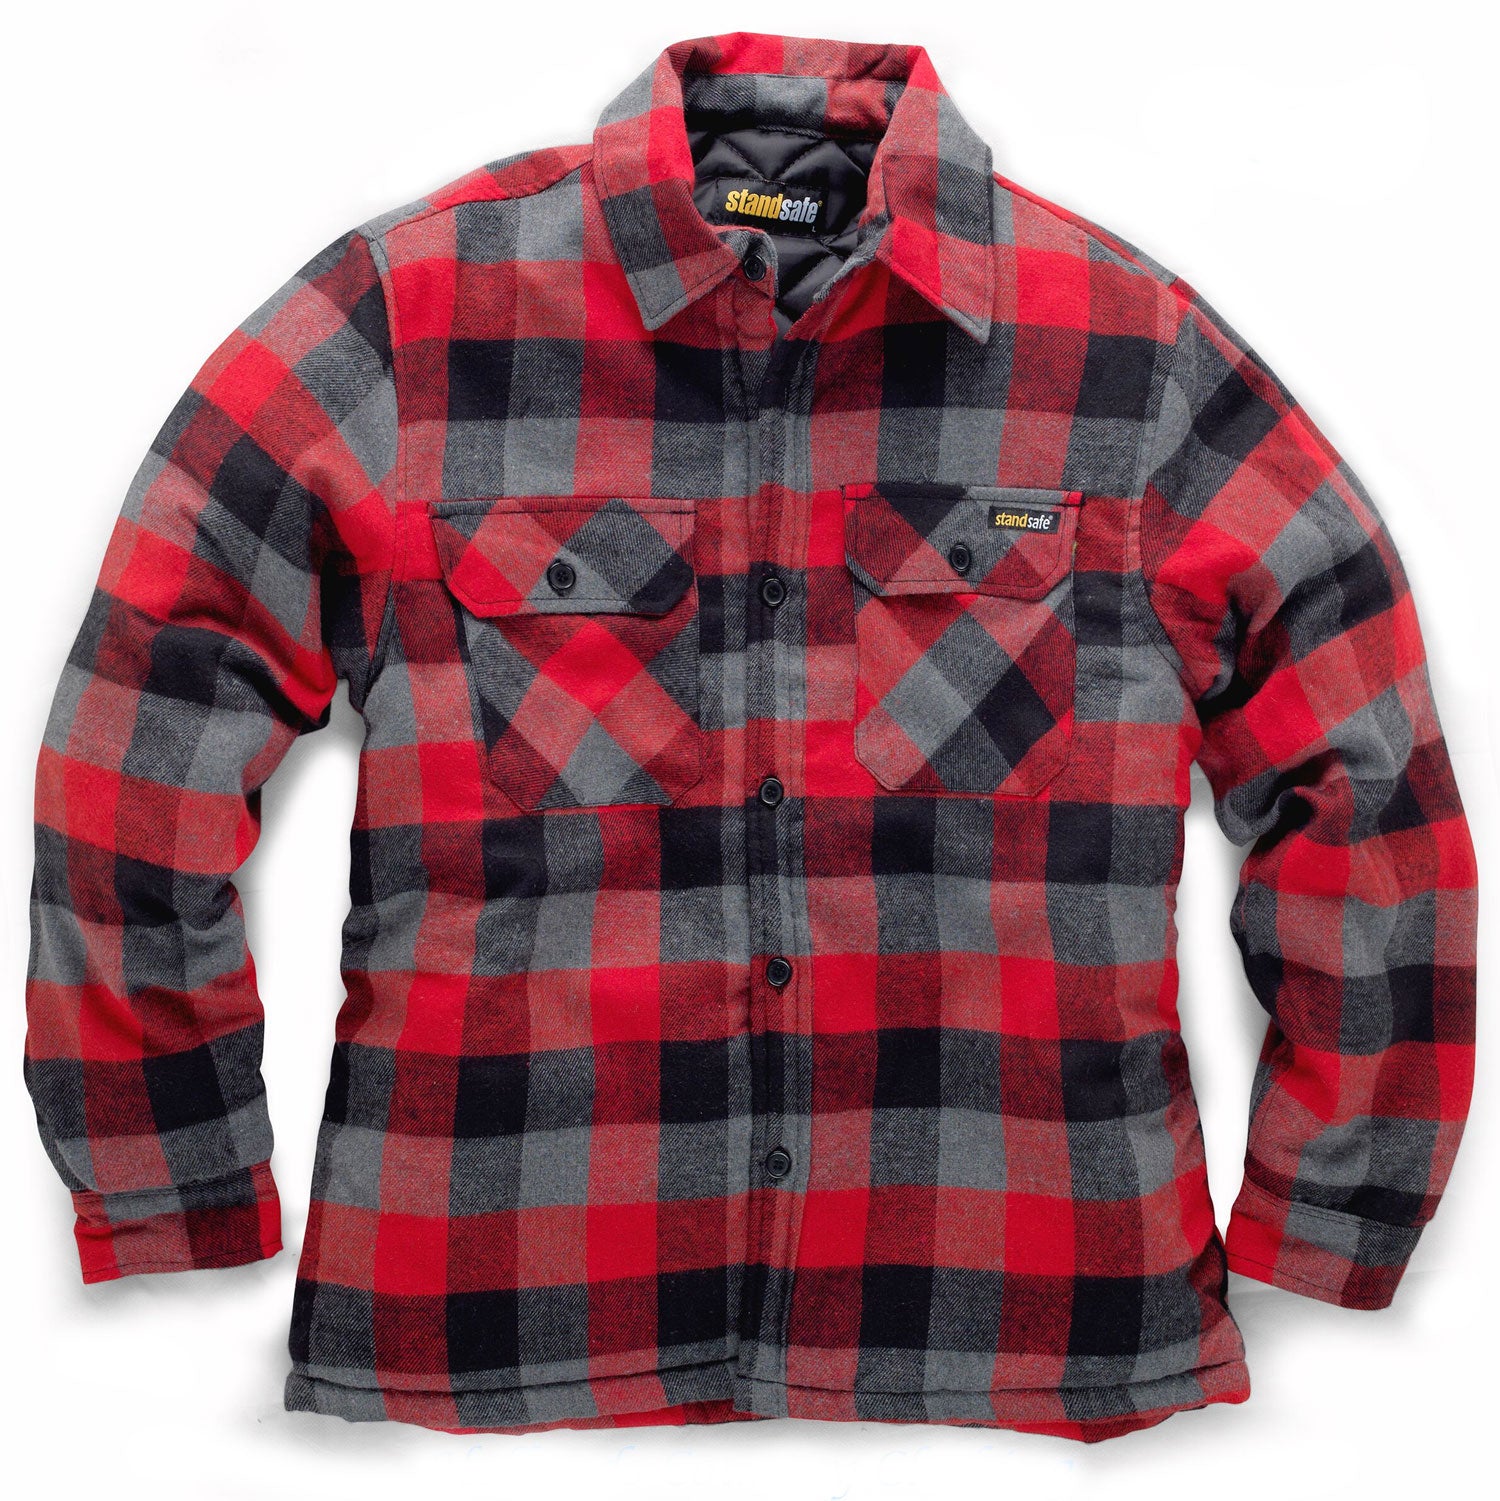 Red and black lumberjack check padded winter shirt